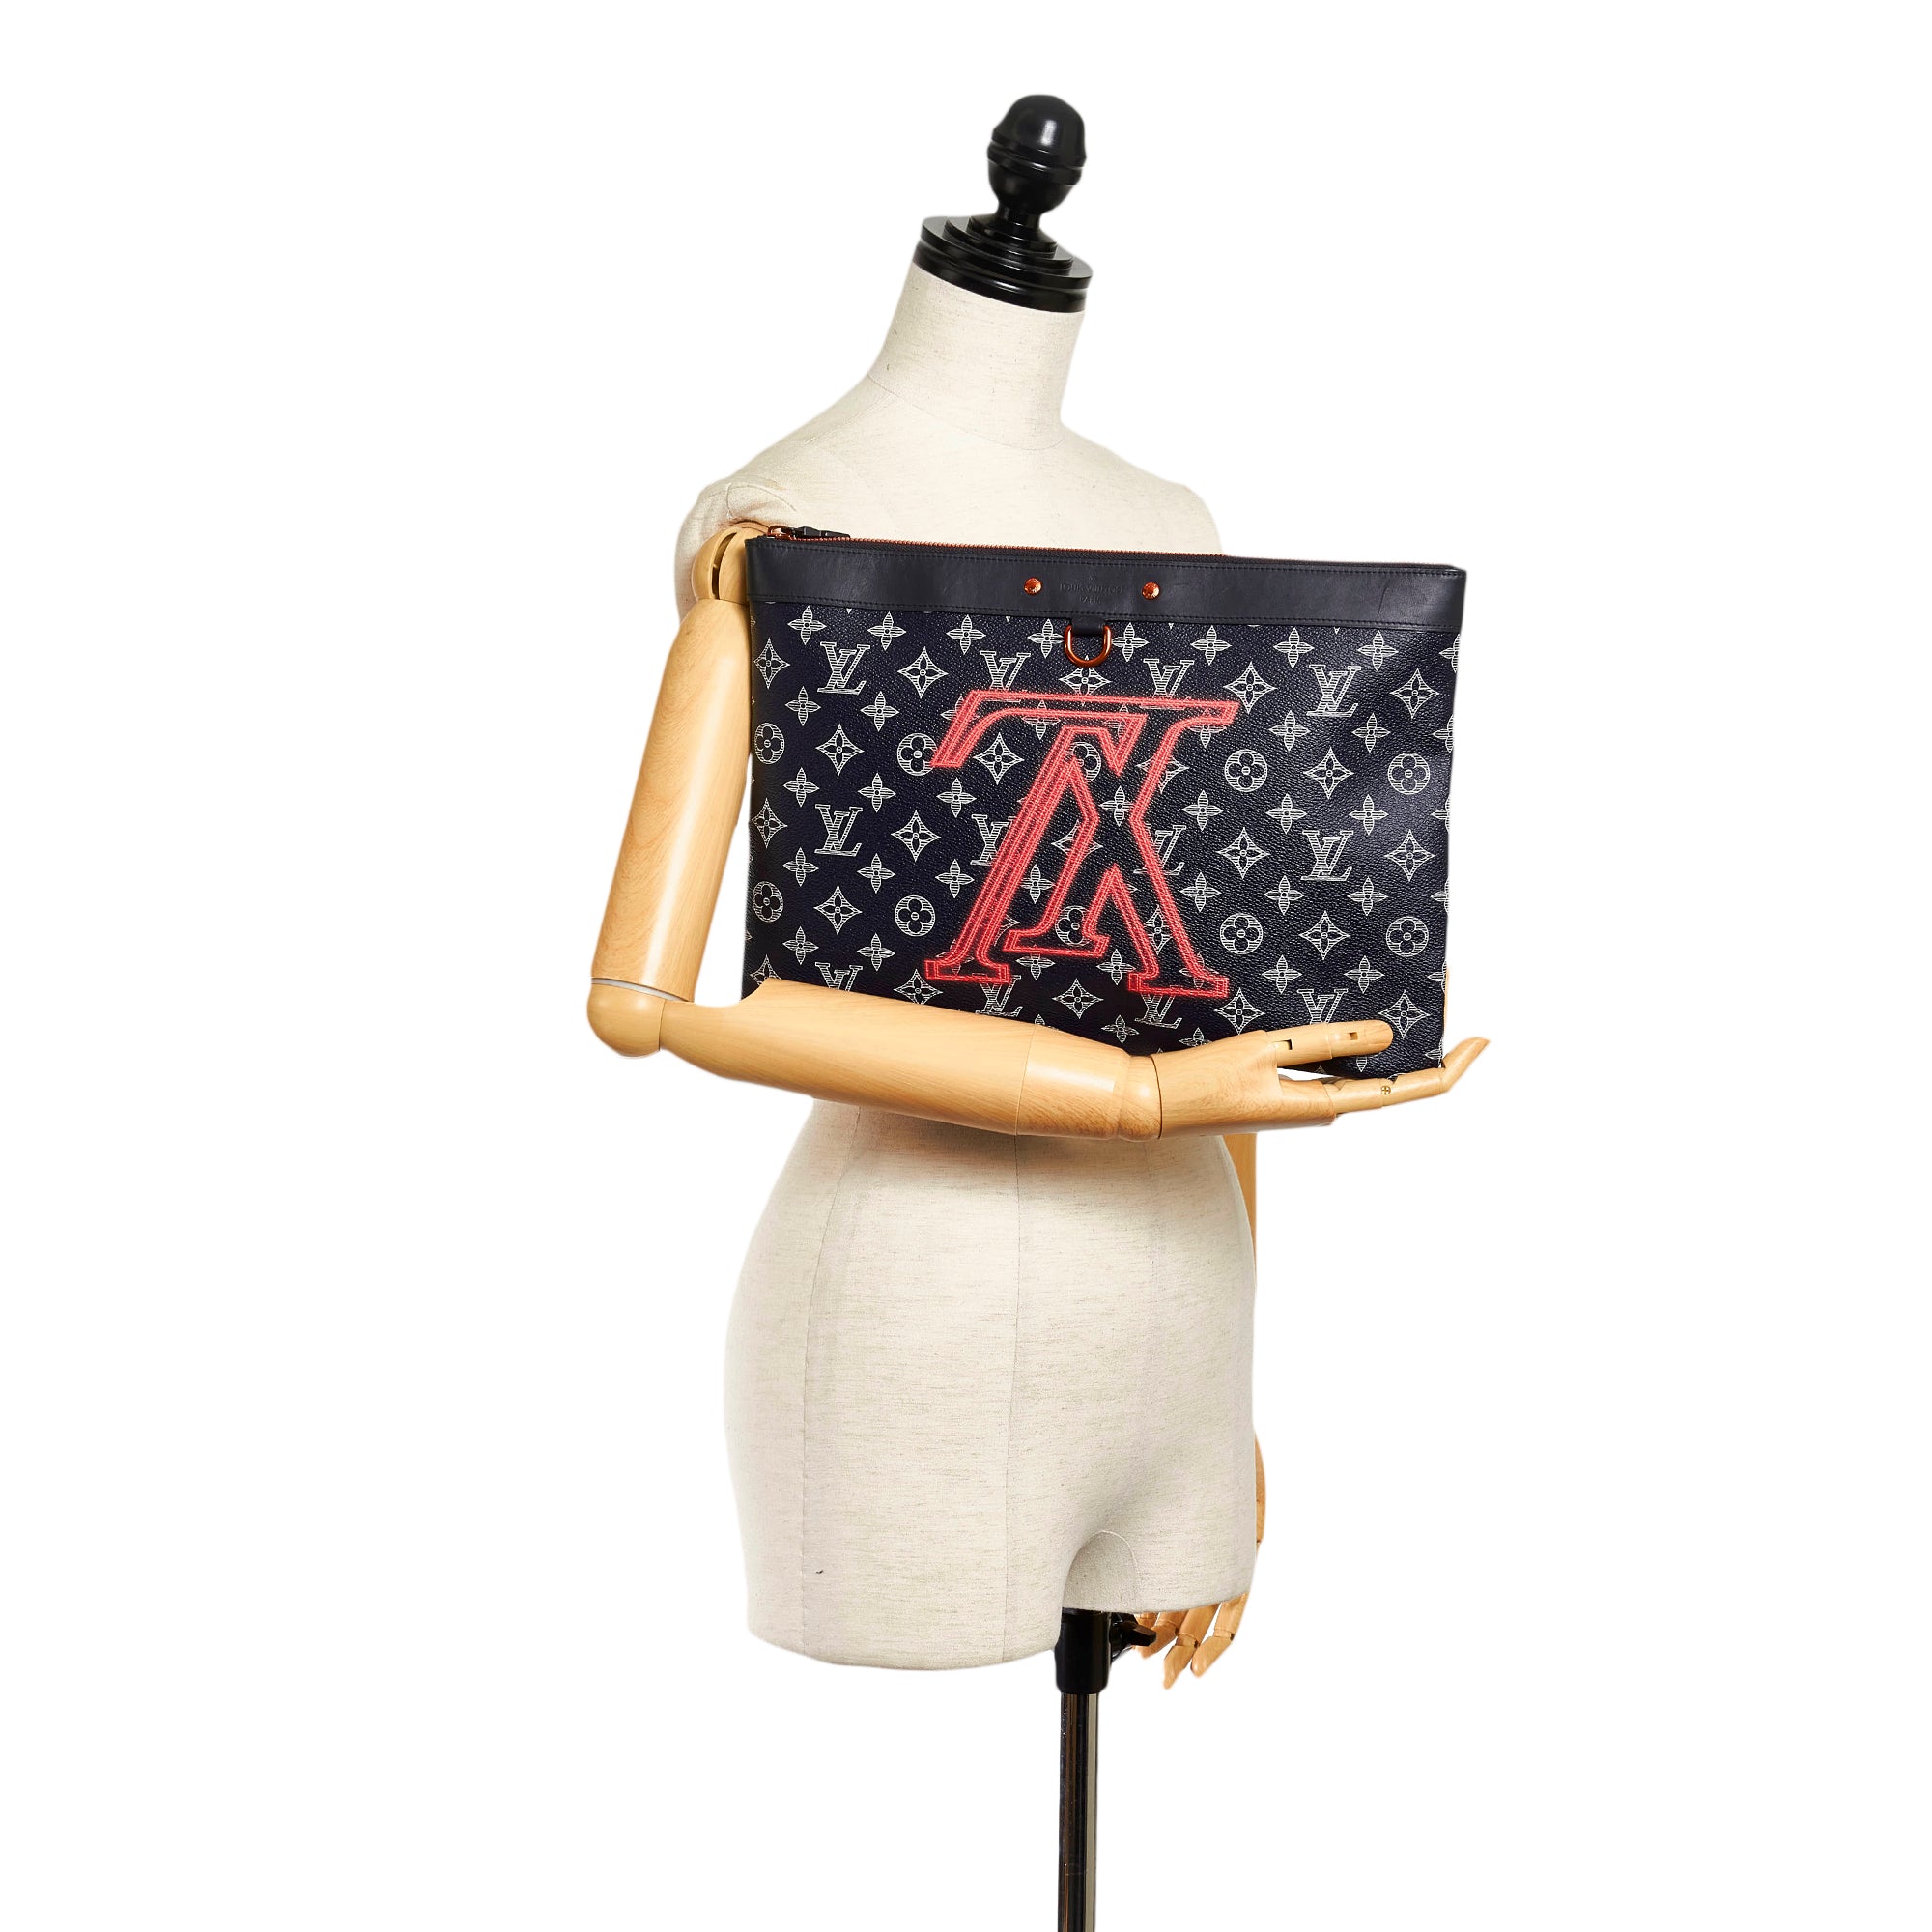 Louis Vuitton Pochette Apollo Limited Edition Clutch Bag Upside Down LV Logo